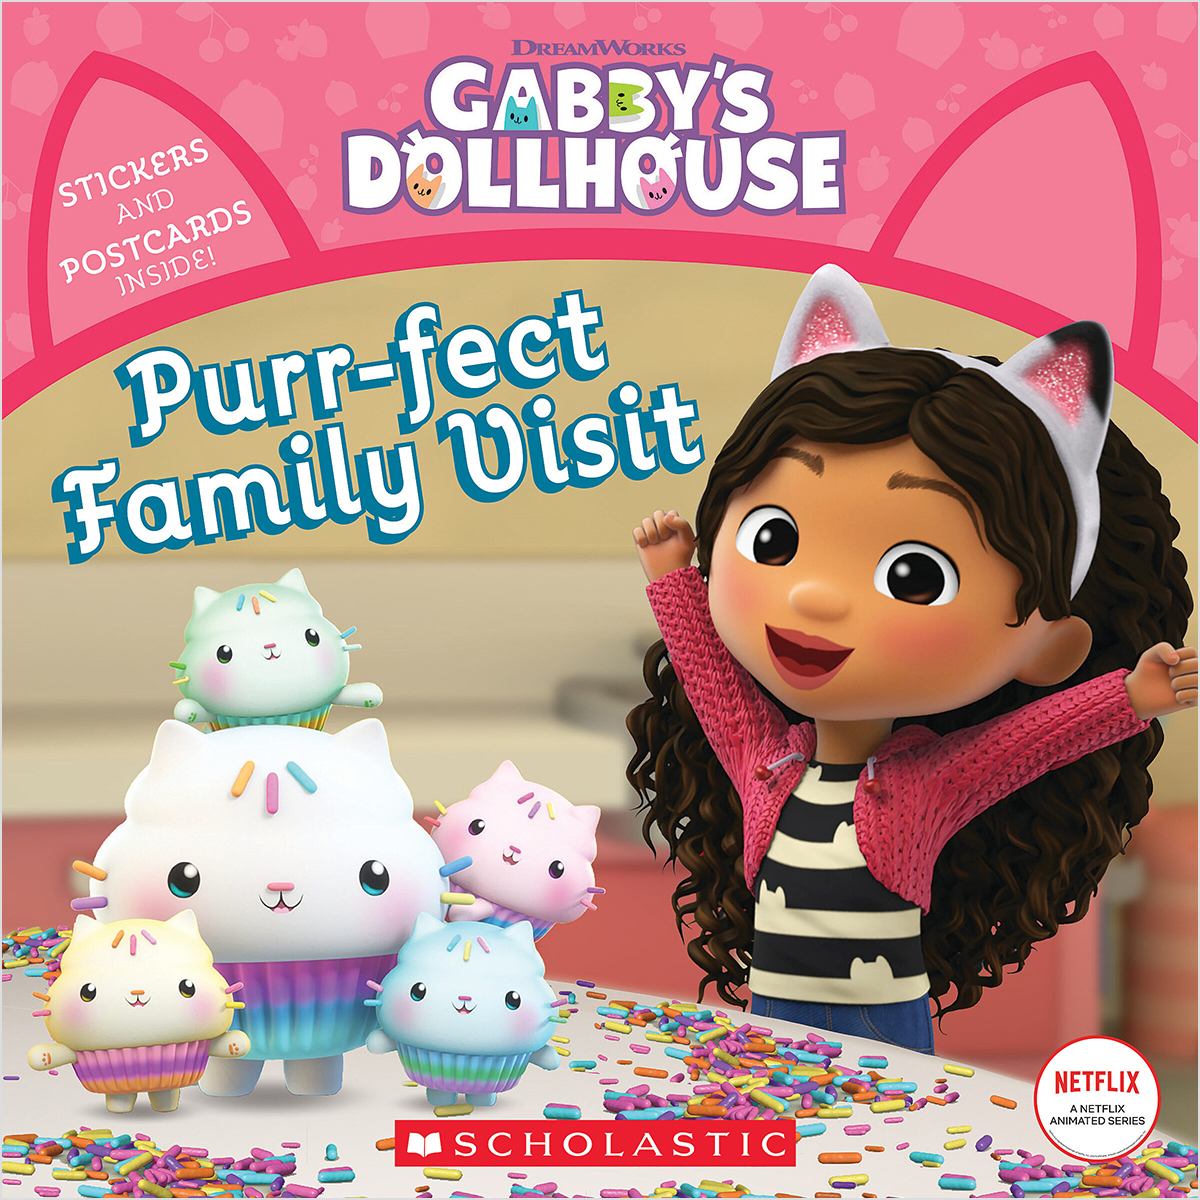  Gabby's Dollhouse: Purr-fect Family Visit 